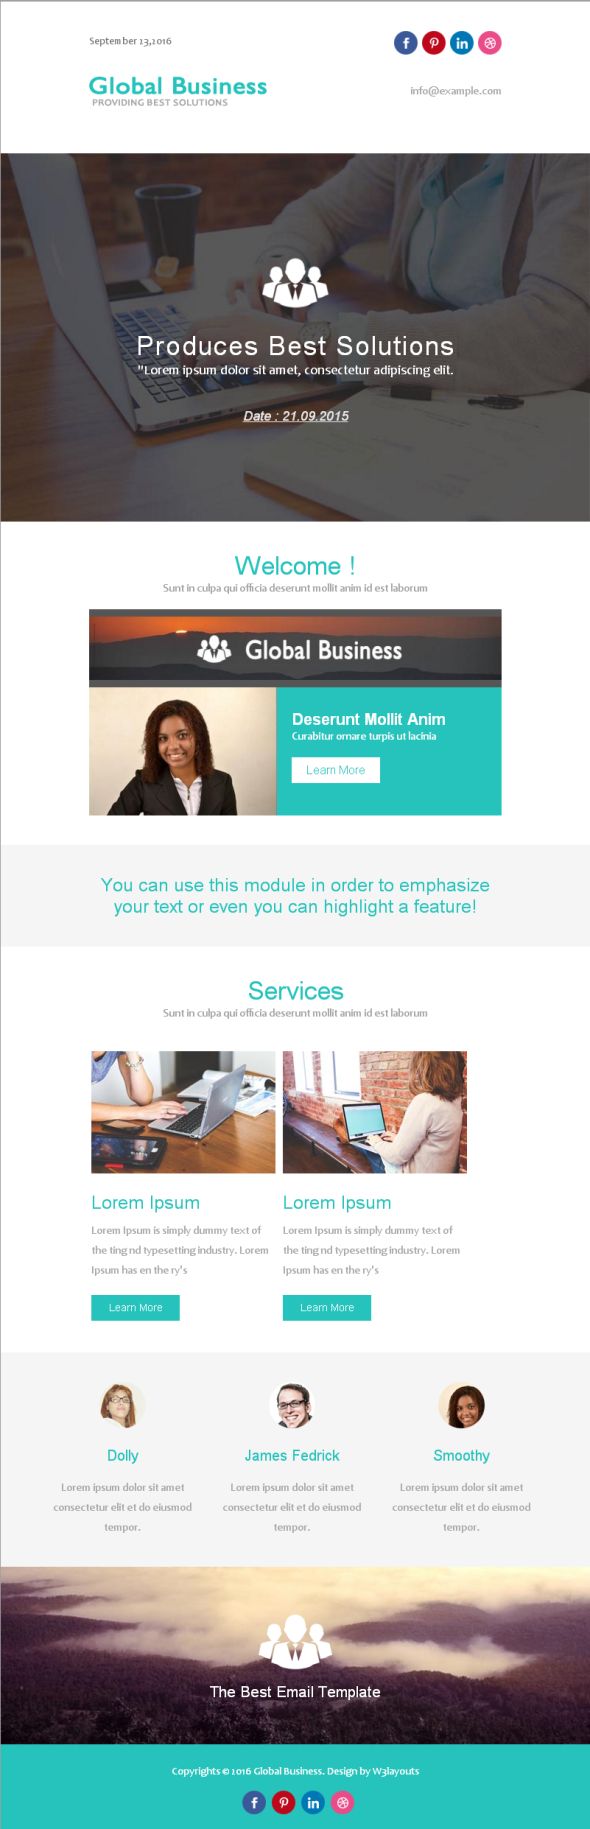 global-business-newsletter-template